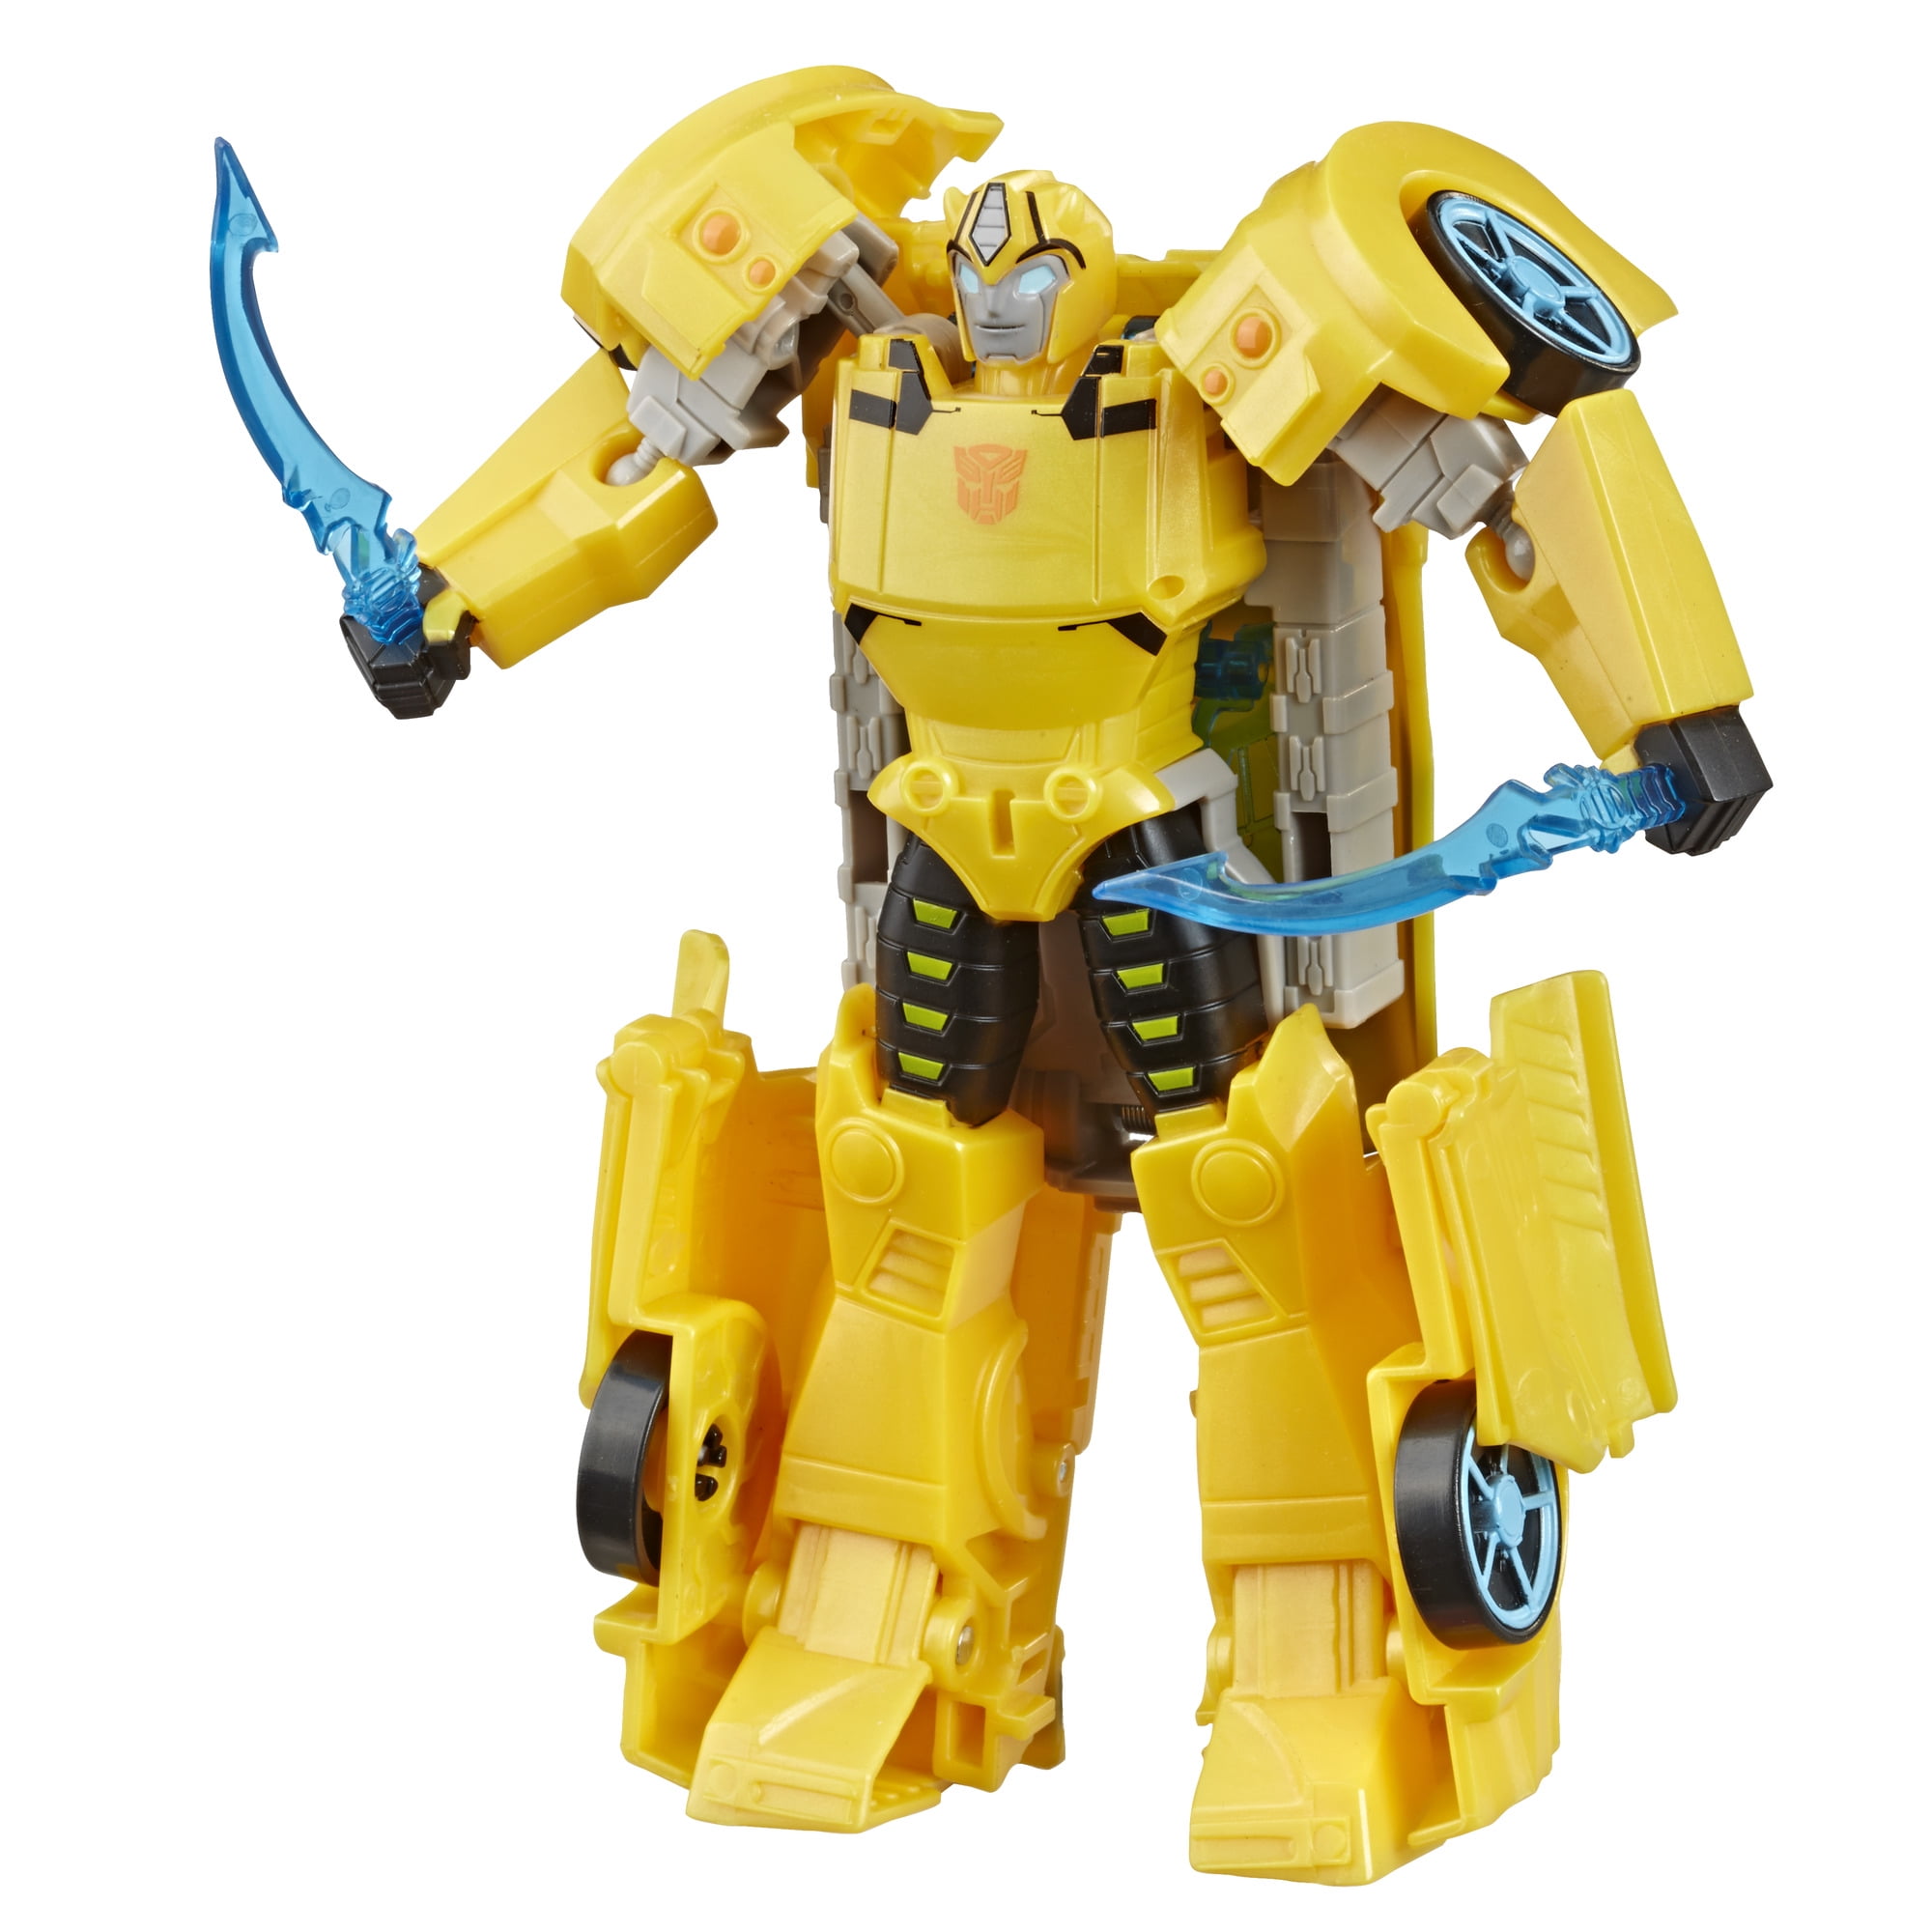 Transformers Cyberverse Cartoon Series 7-inch Ultra Class Bumblebee 